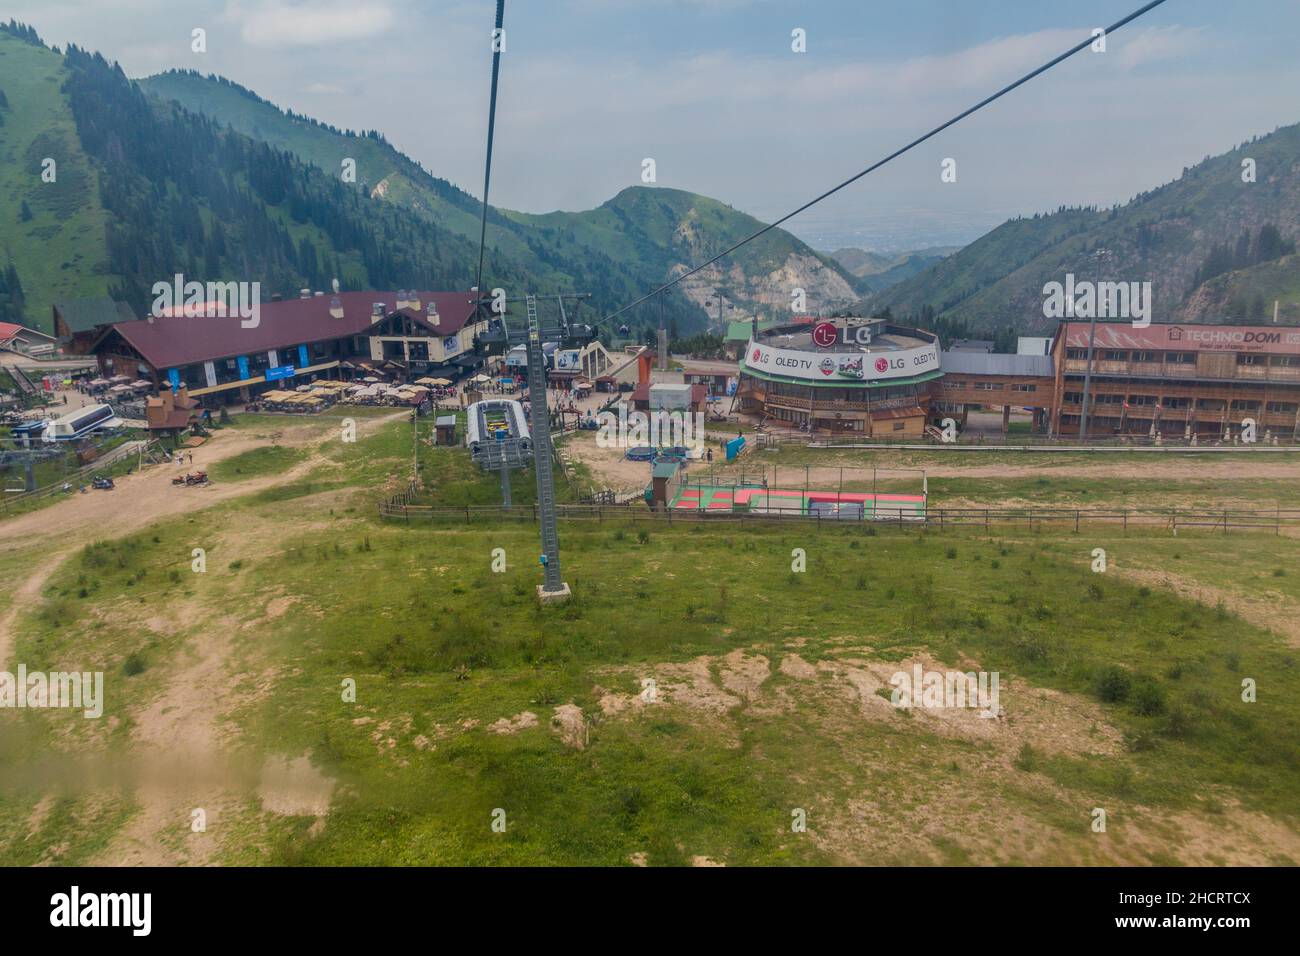 ALMATY, KAZAKHSTAN - JULY 29, 2018: View of Shymbulak Chimbulak ski resort in summer near Almaty. Stock Photo